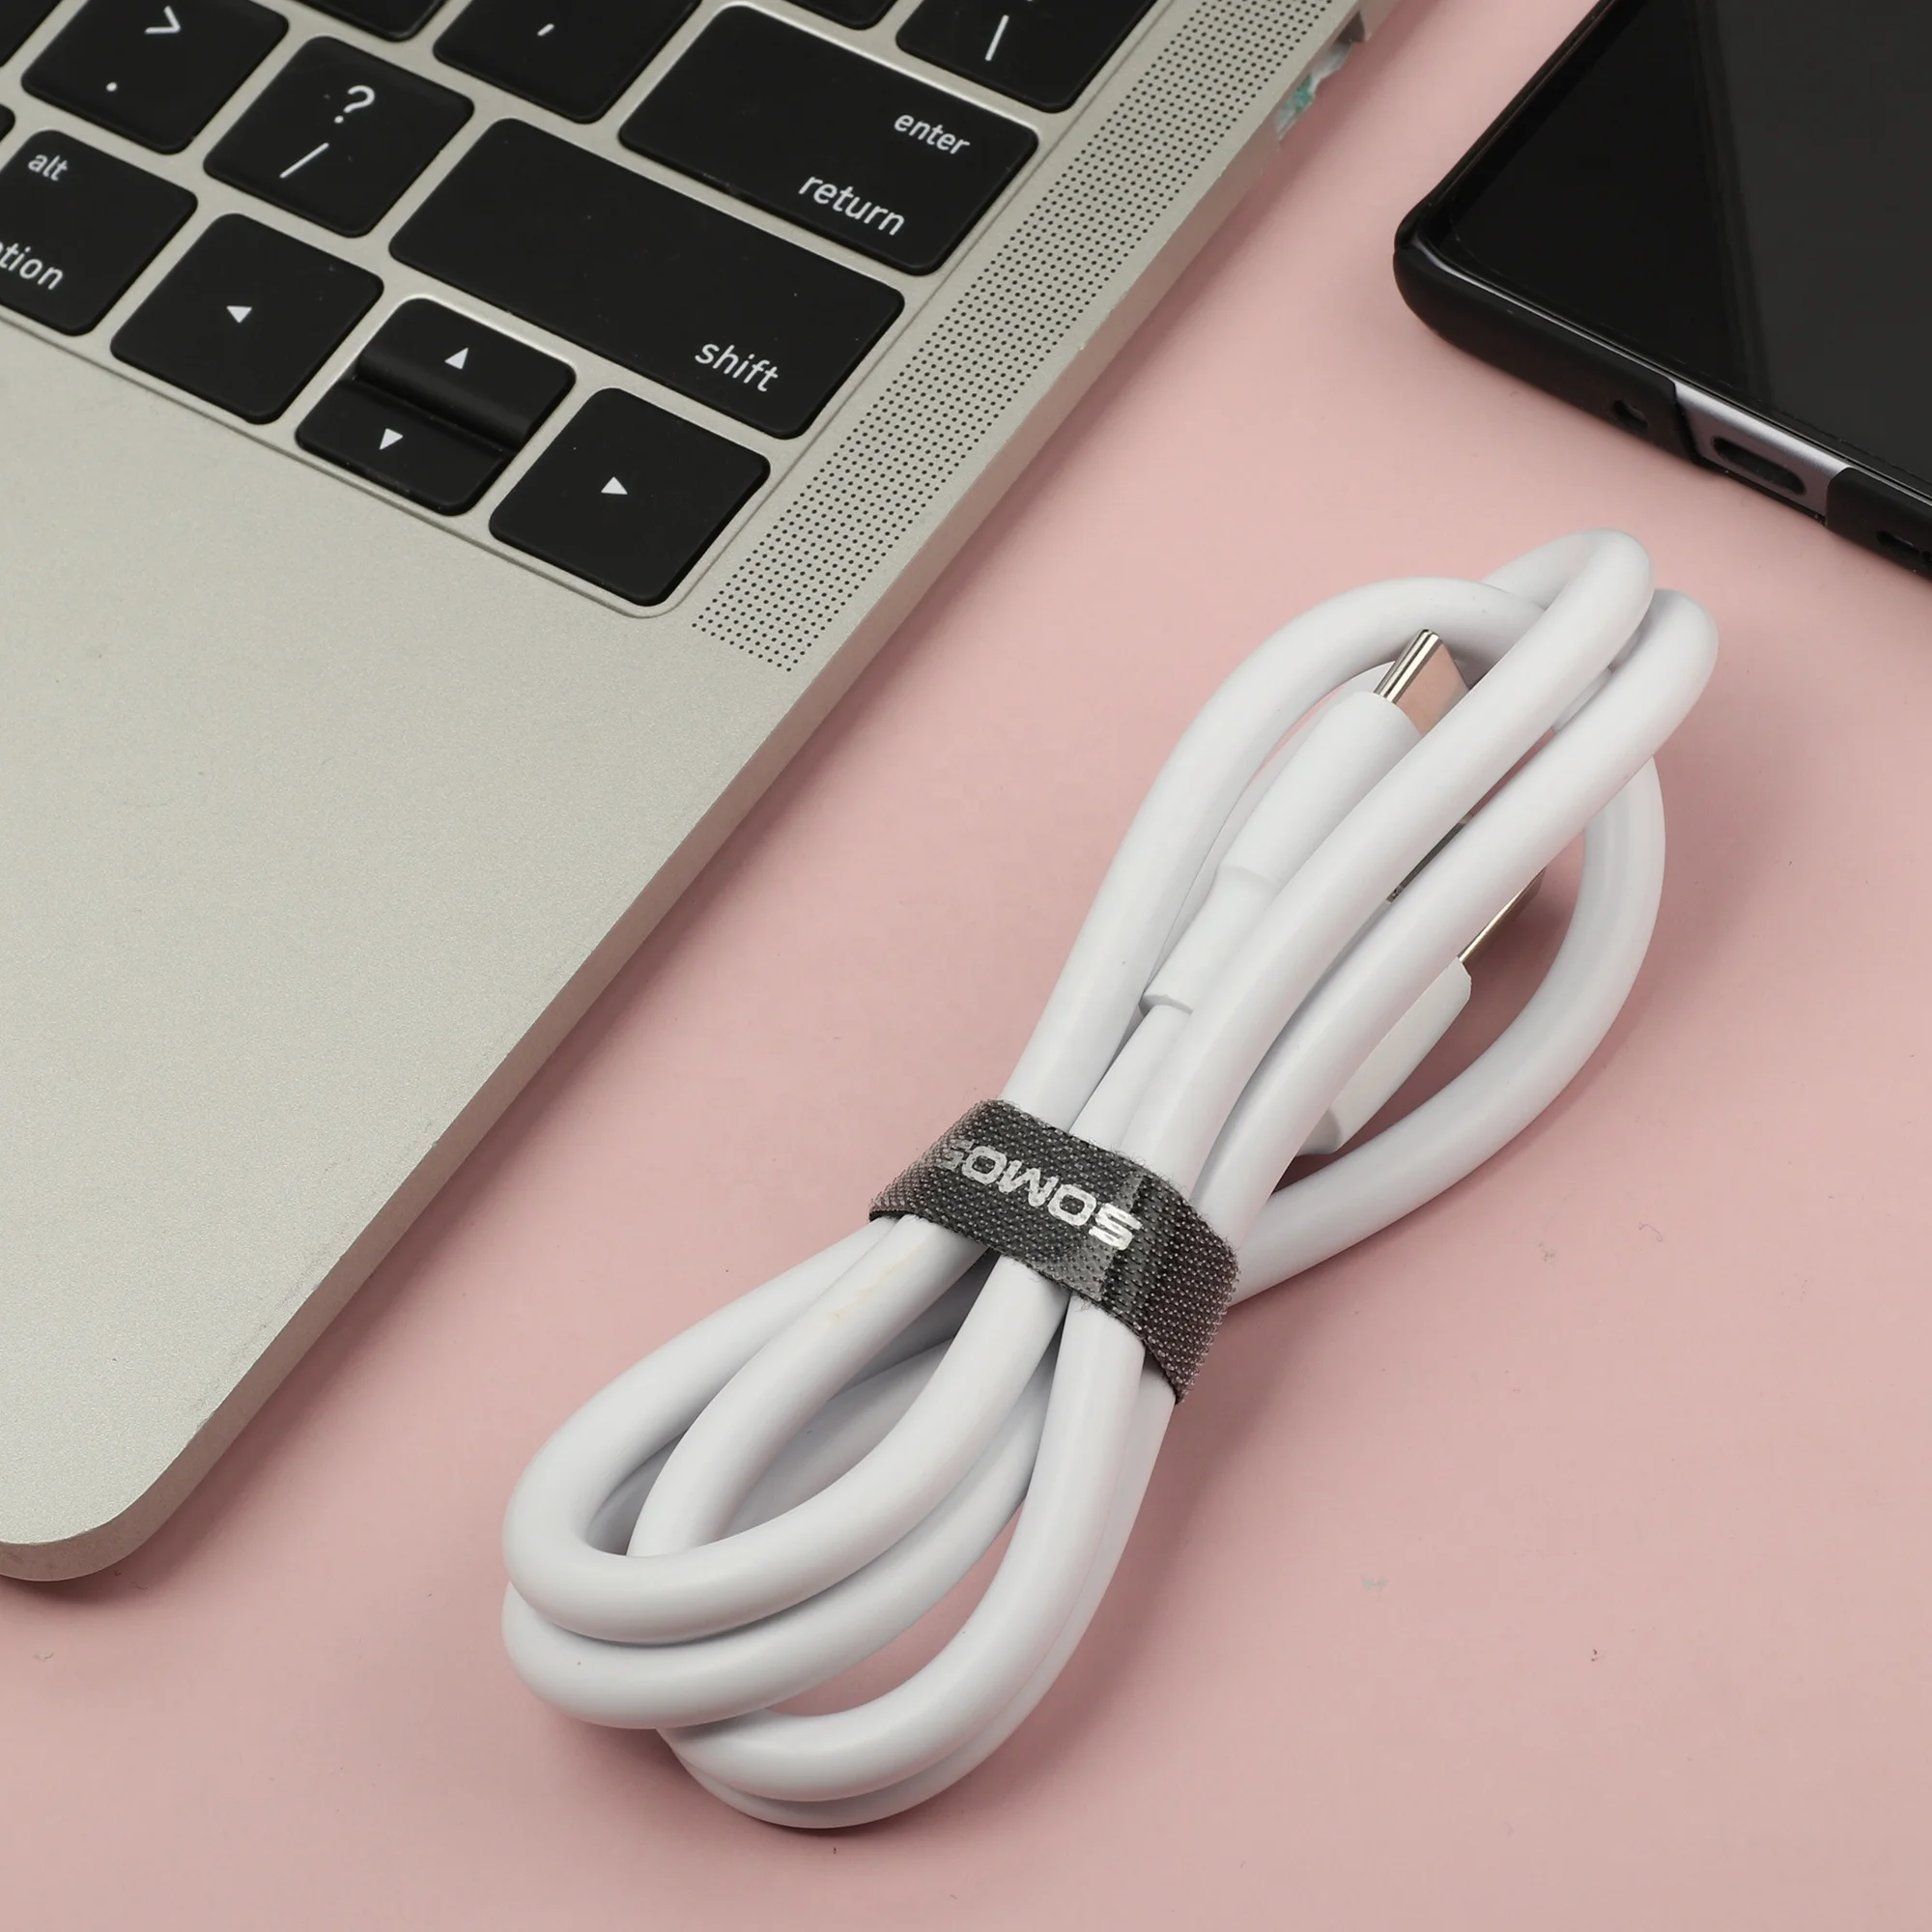 Popular cable de datos de cargador USB tipo C de carga super rapida para For Huawei Xiaomi Samsung telefono movil